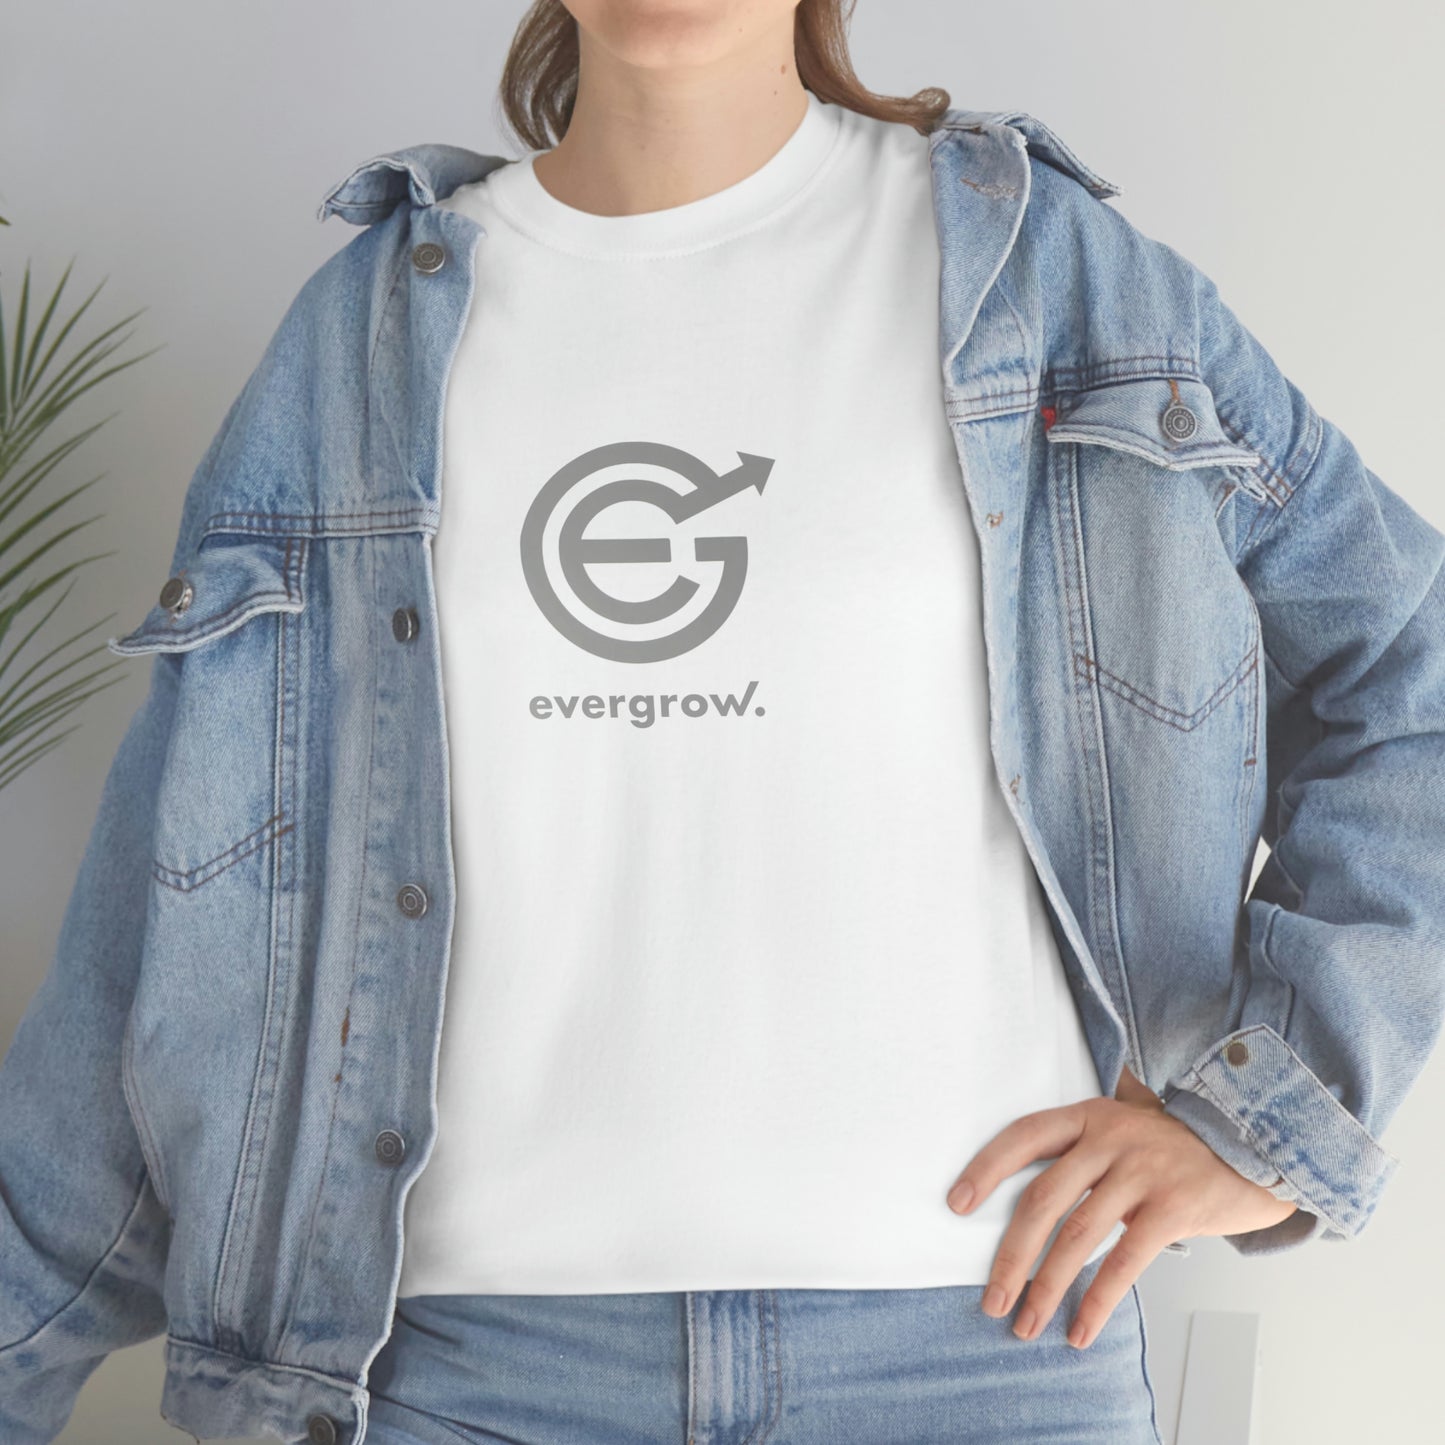 USA - Unisex Heavy Cotton Tee - EverGrow Logo in Gray and evergrow